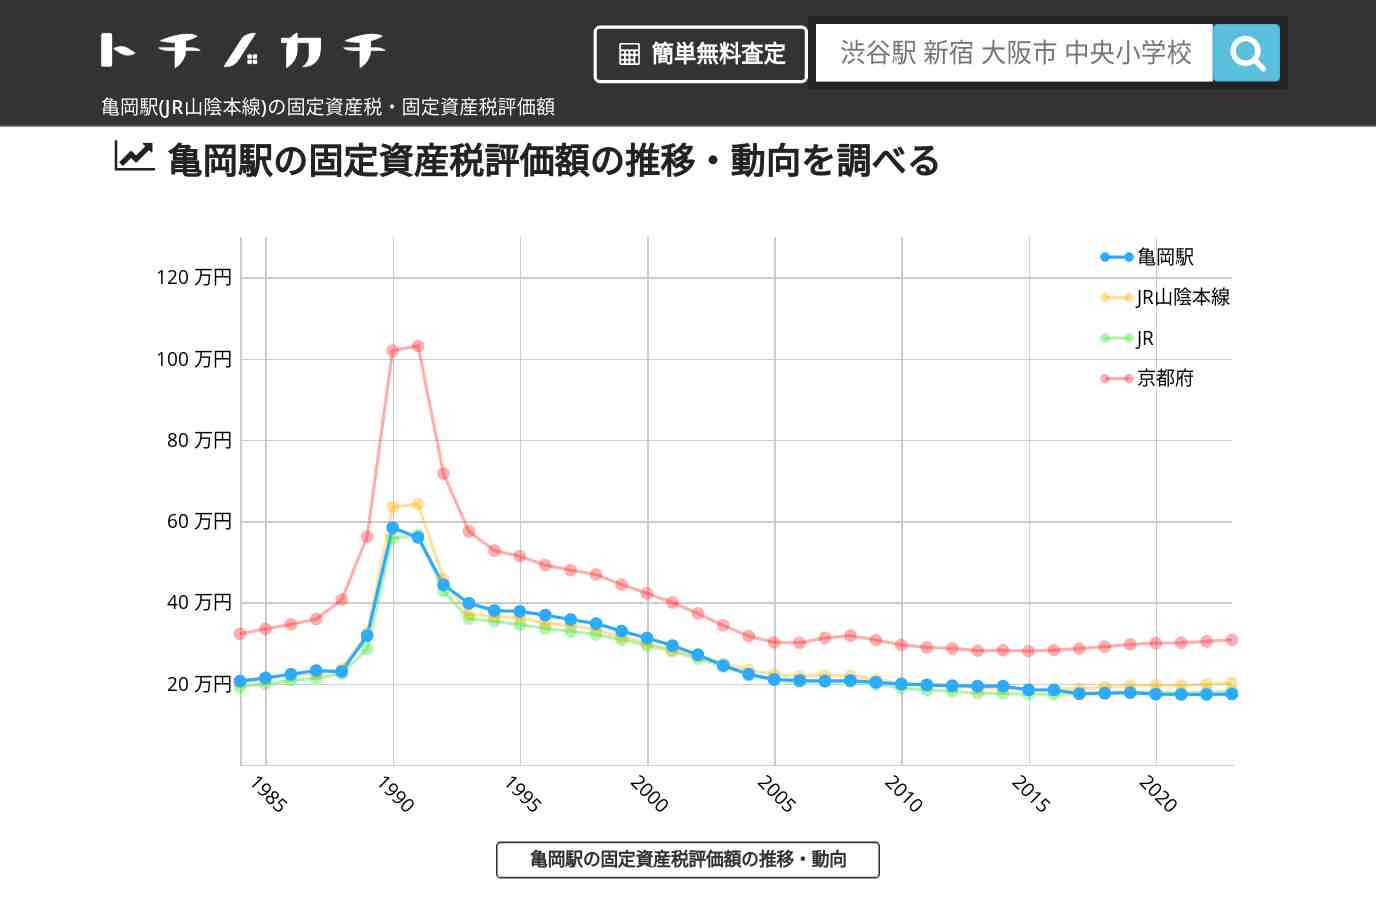 亀岡駅(JR山陰本線)の固定資産税・固定資産税評価額 | トチノカチ